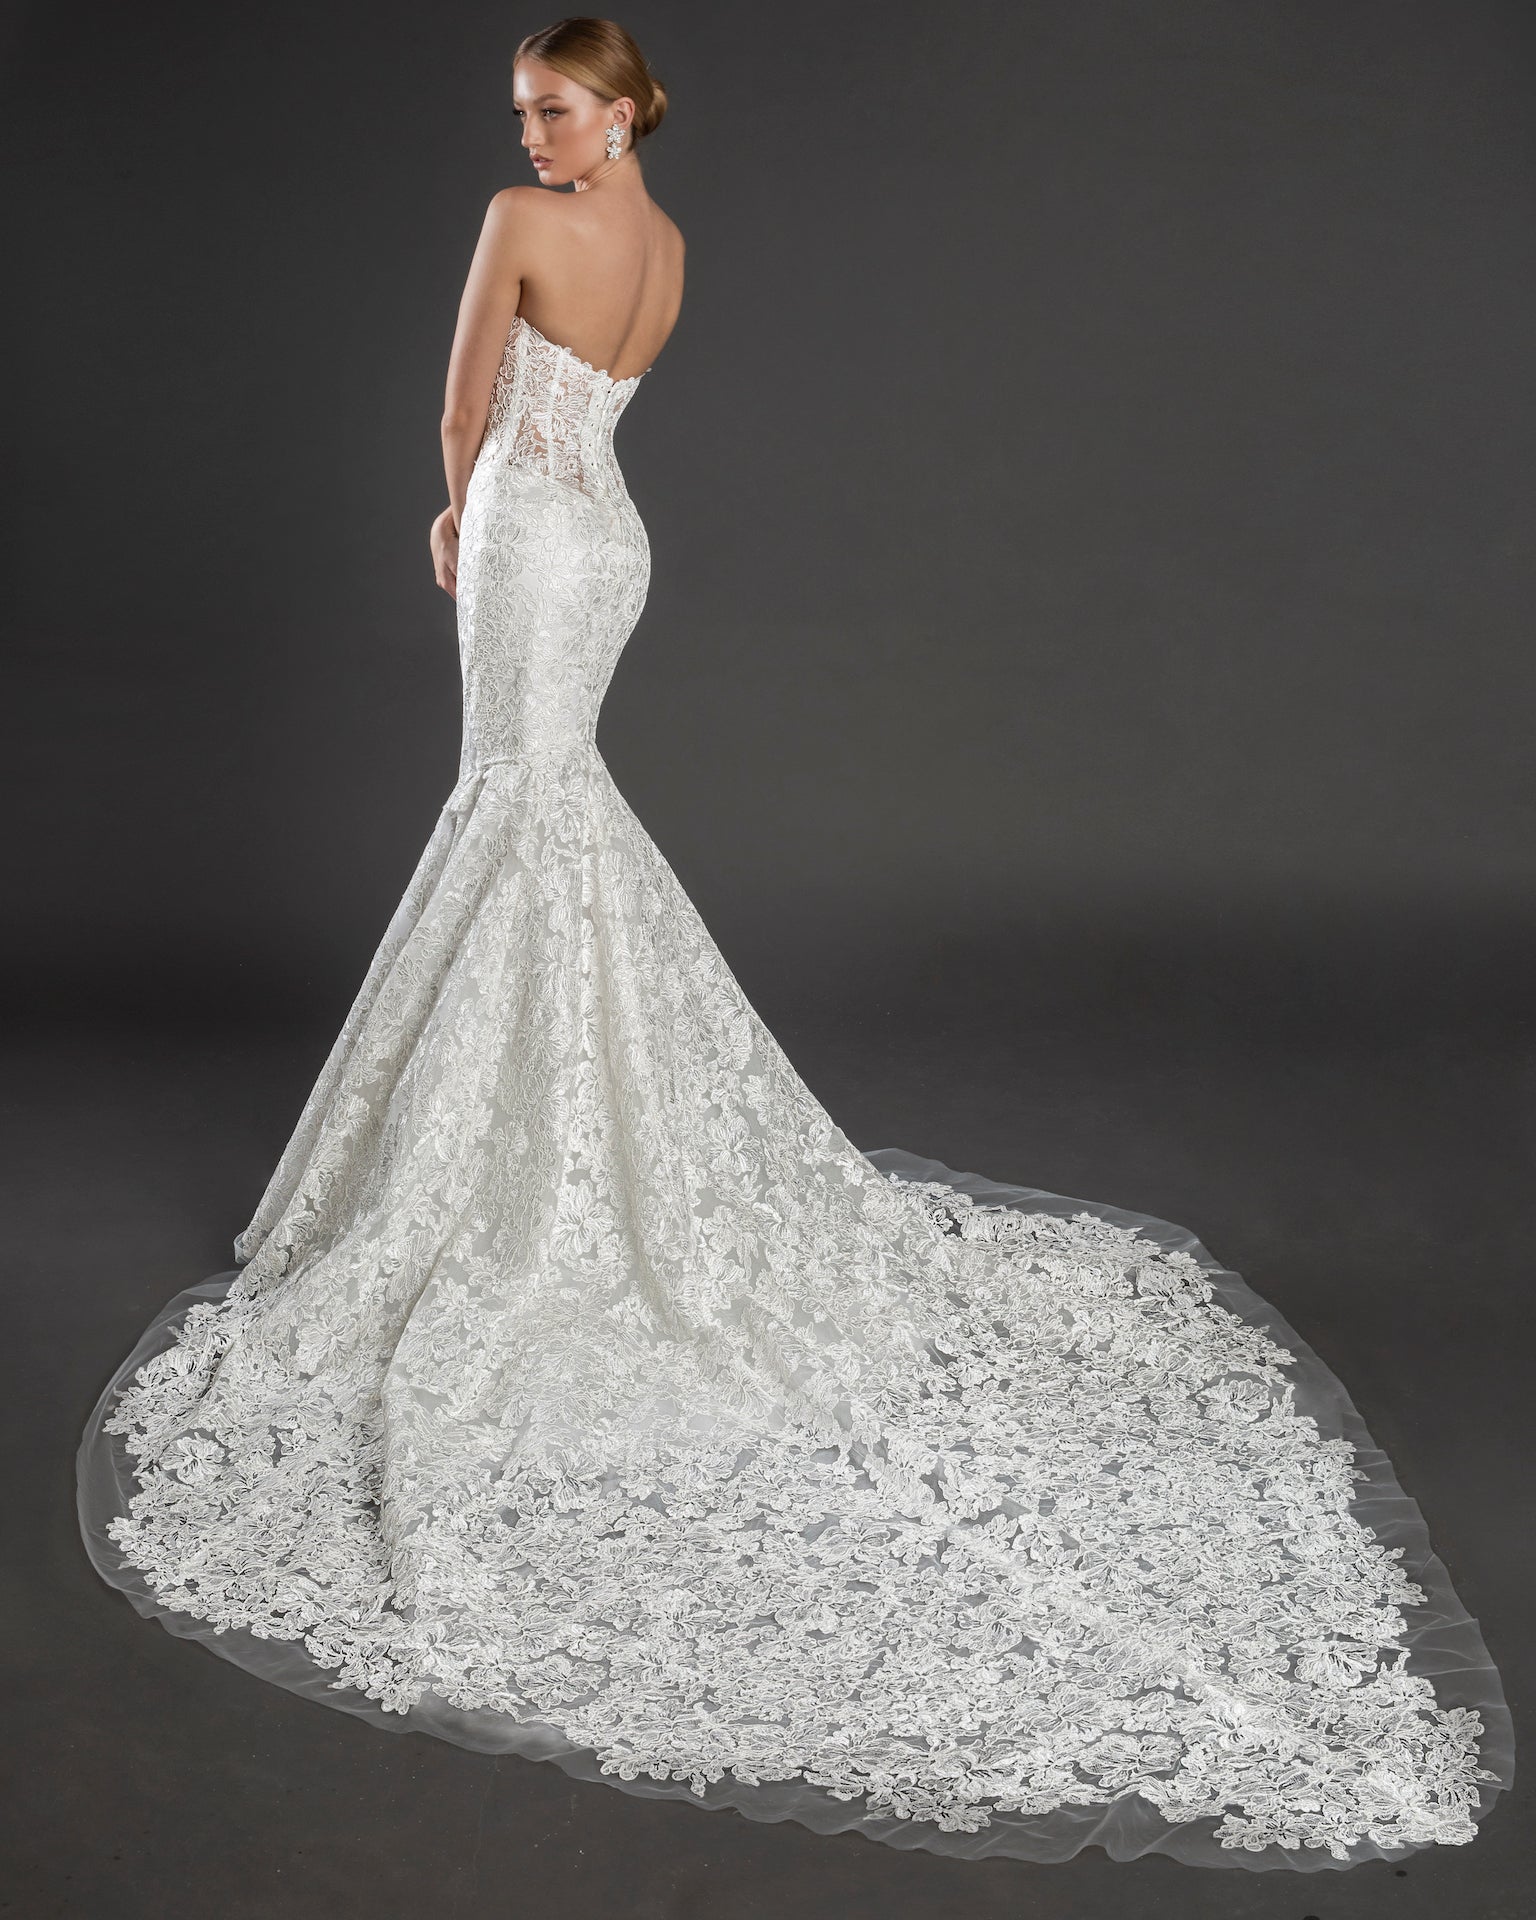 Strapless Sweetheart Neckline Lace Mermaid Wedding Dress | Kleinfeld Bridal